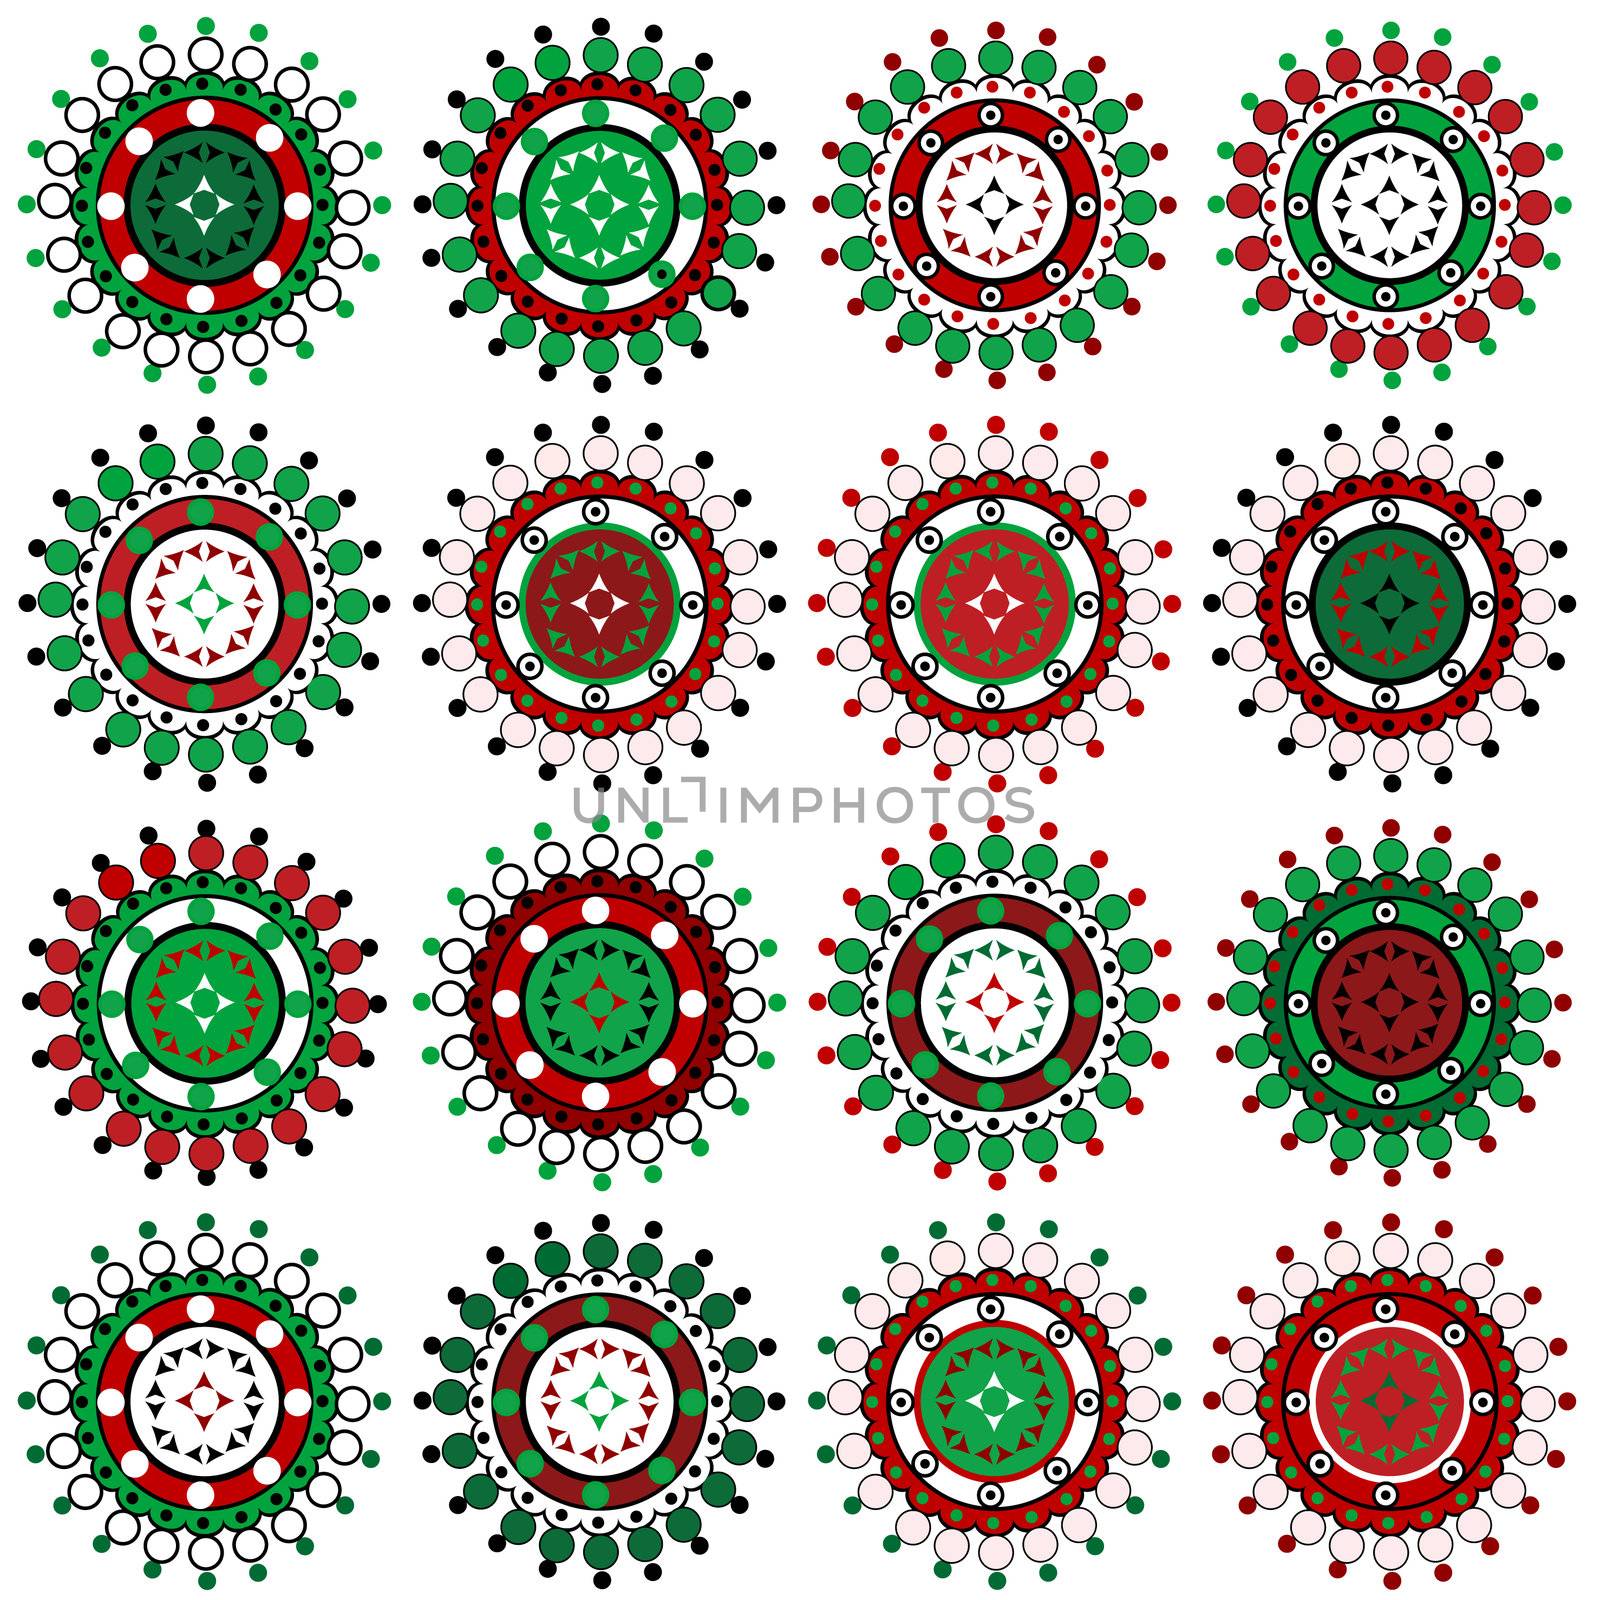 Set of Christmas ornaments by hibrida13